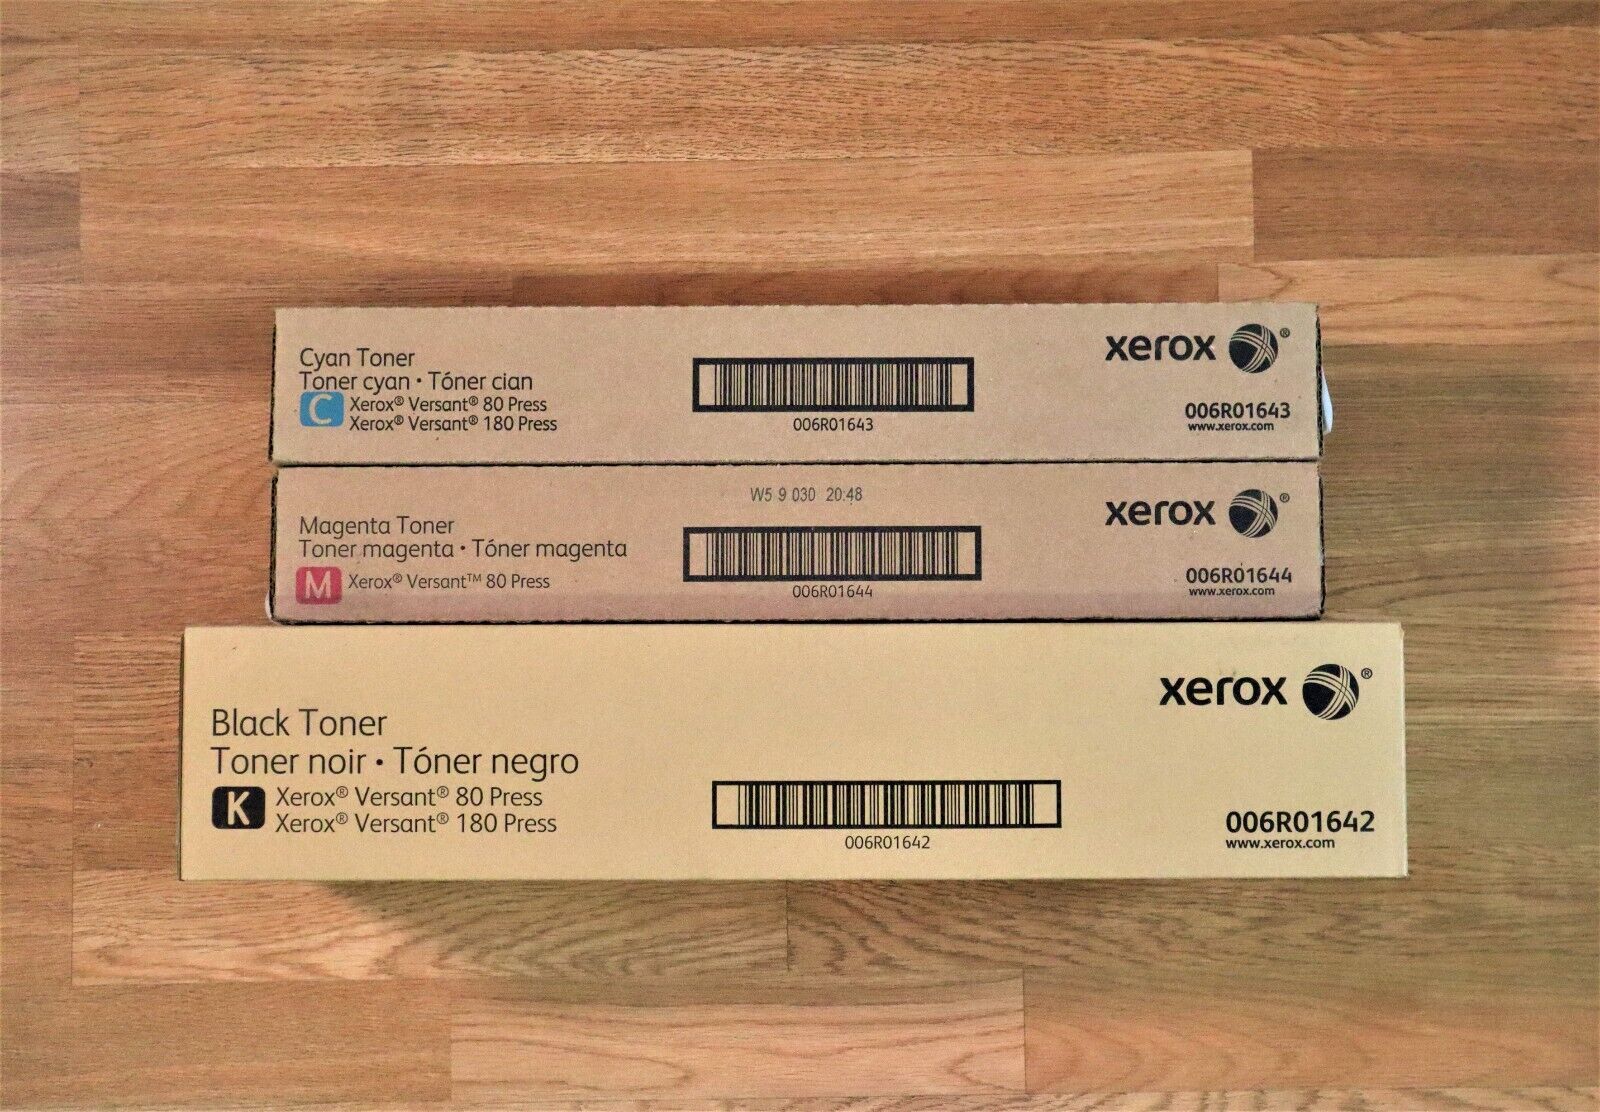 Xerox Toner C,M,K No Hologram For Versant 80, 180, 280 Press EDP:006R01642,43,44 - copier-clearance-center